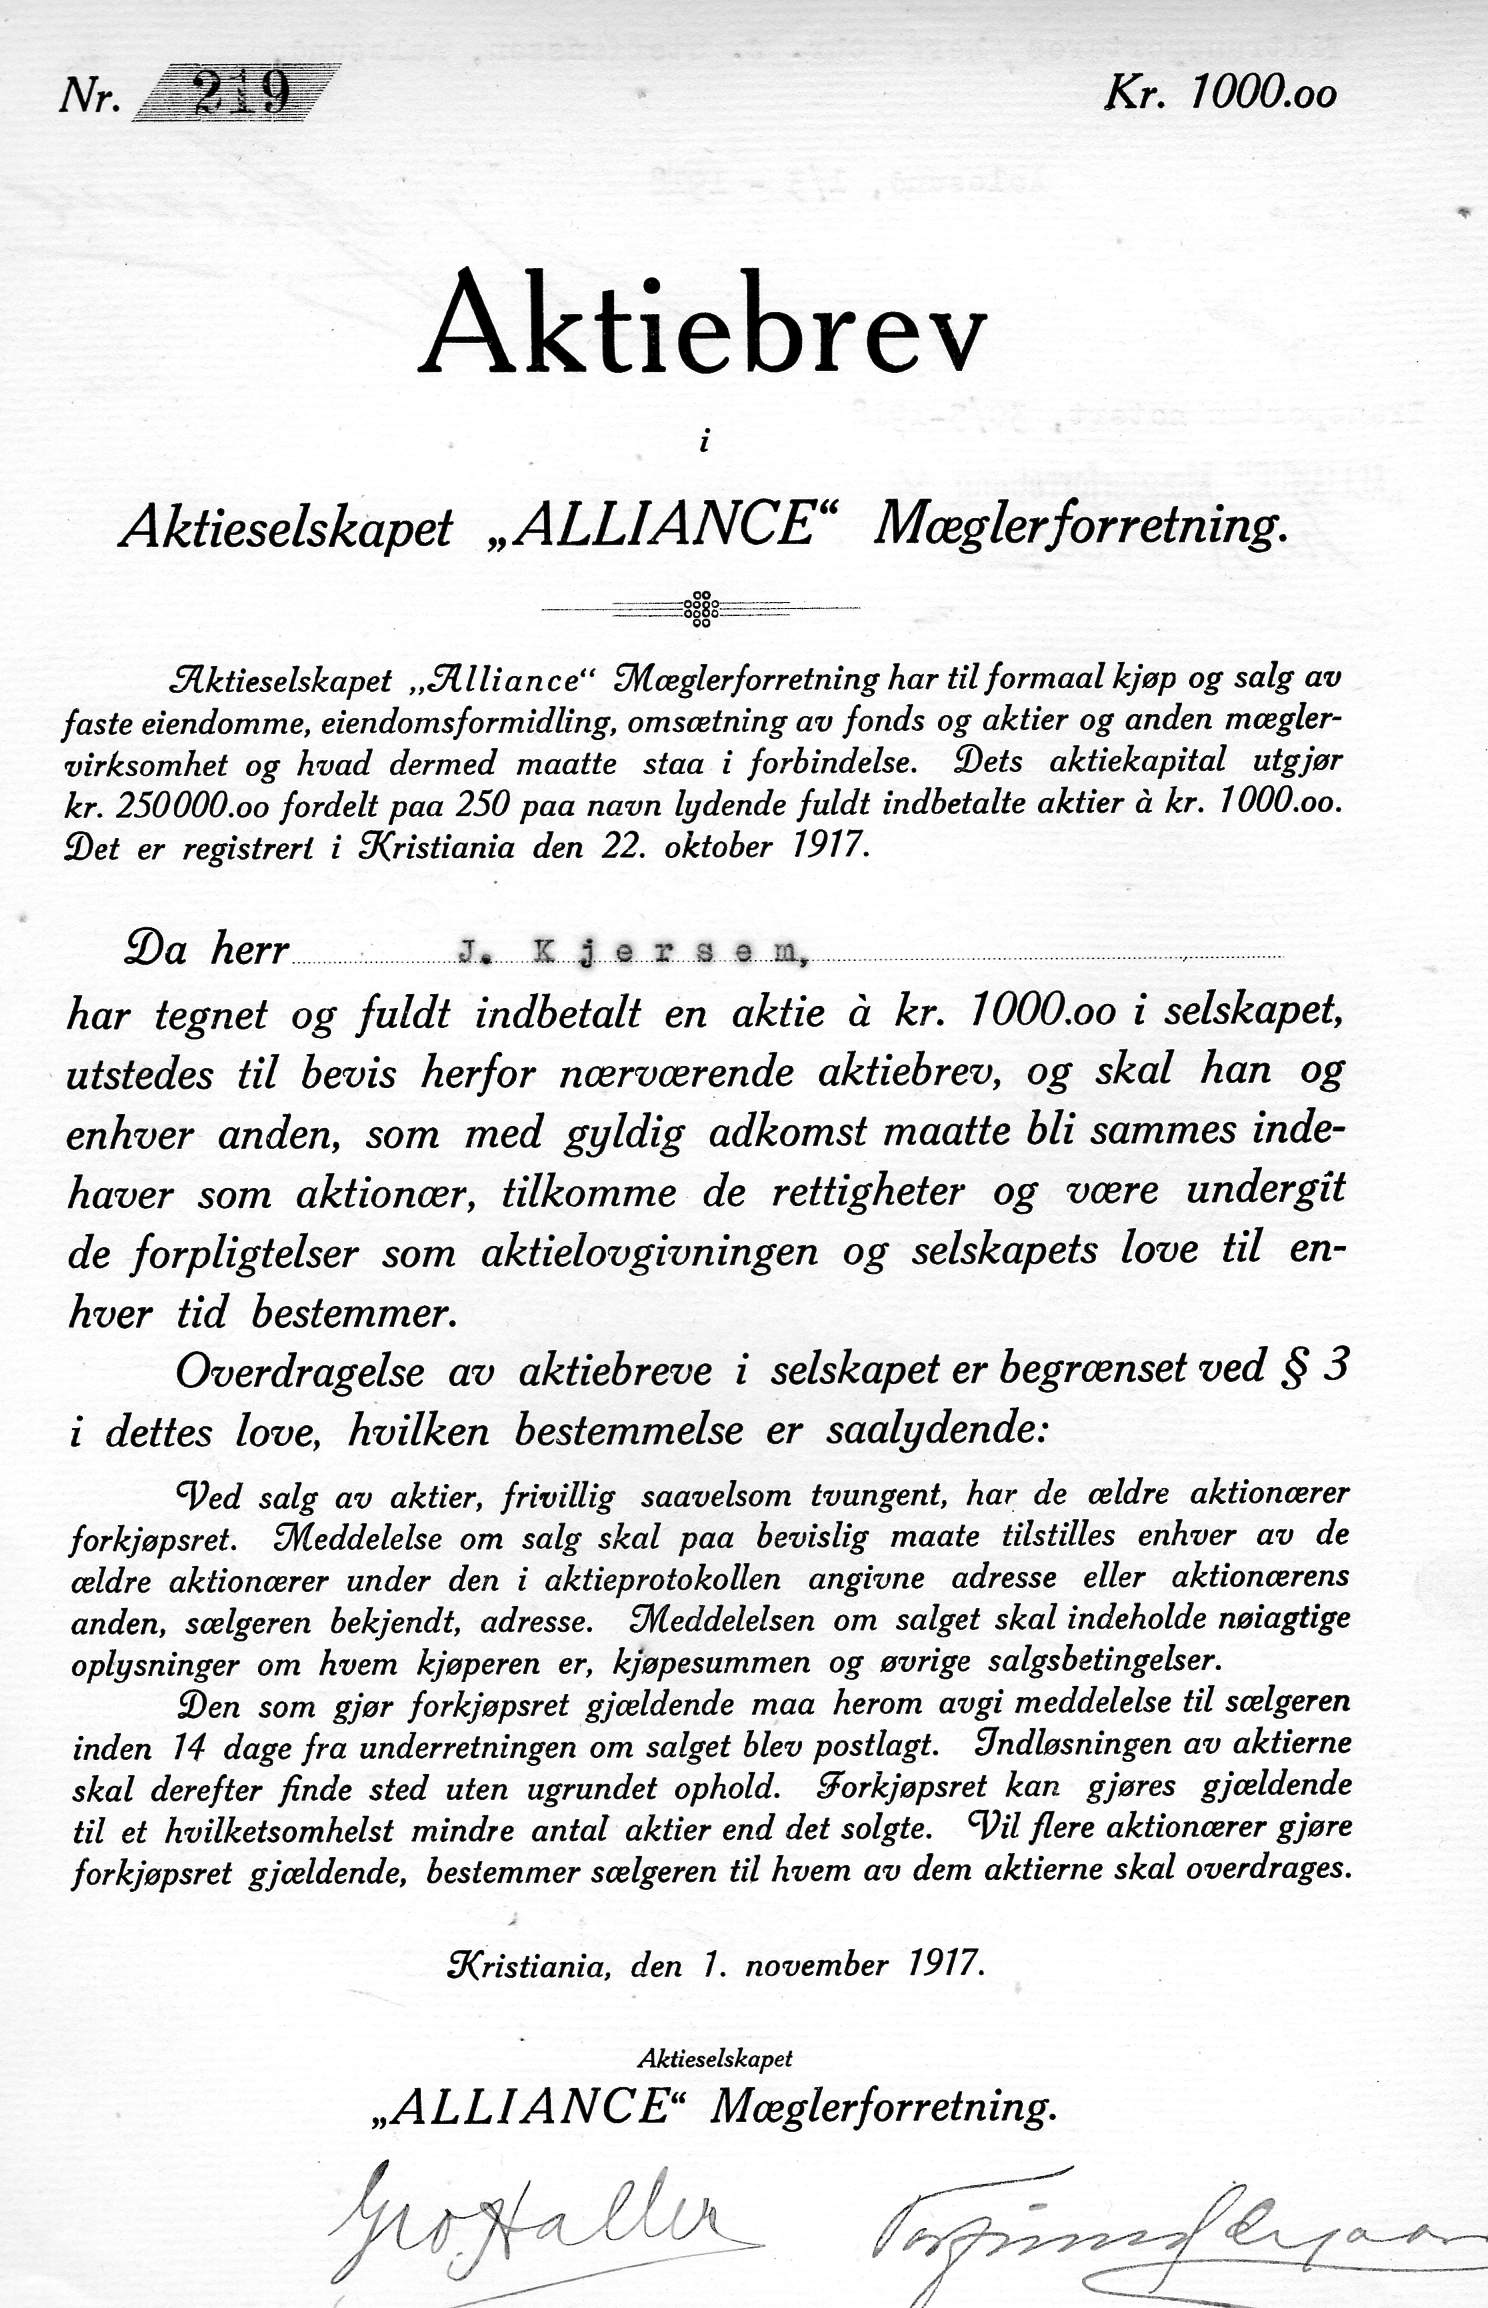 Aktiebrev i "Alliance Mæglerforretning" nr 219,212 og 211 pr stk kr 200 kr 1000 Kristiania 1917